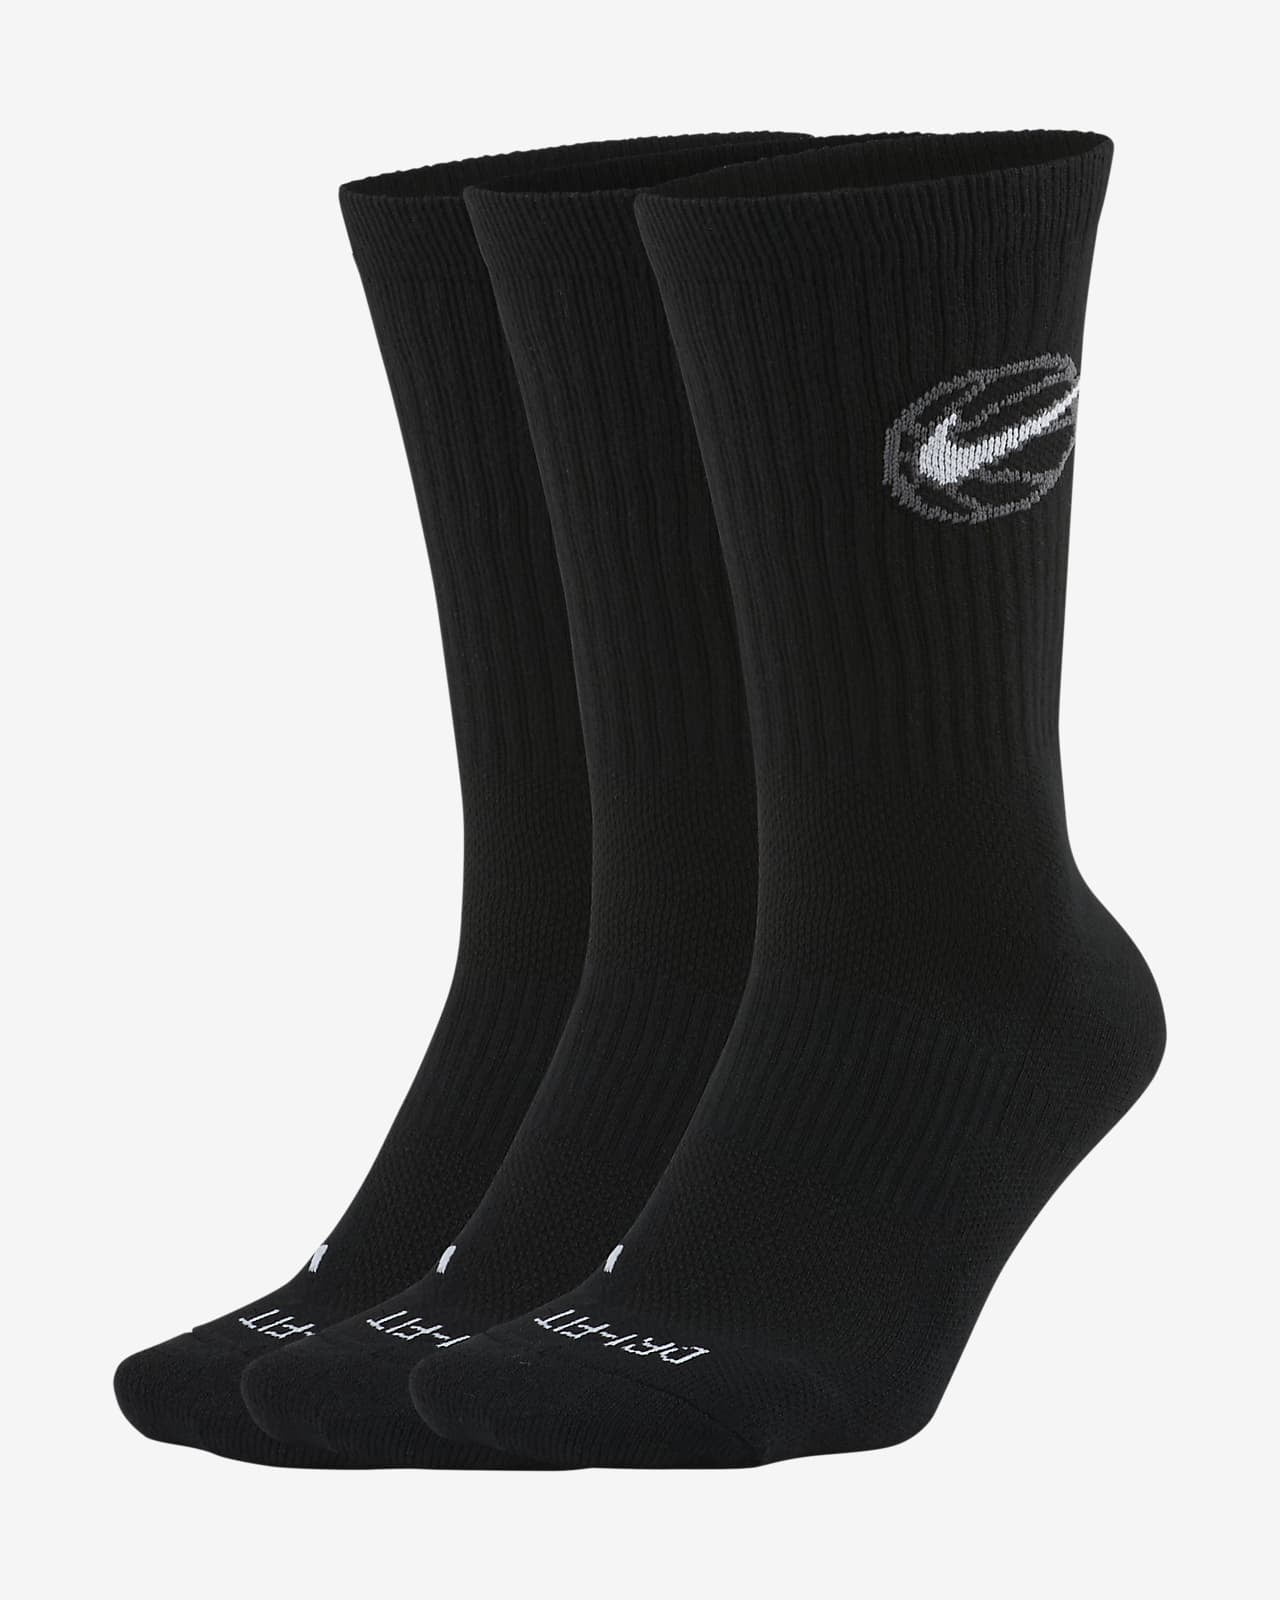 Nike Elite Everyday Black - Crew 3 Socks - Pack DA2123 L Gray - 8-12 / Basketball Dri-Fit 010 Swoosh Sz